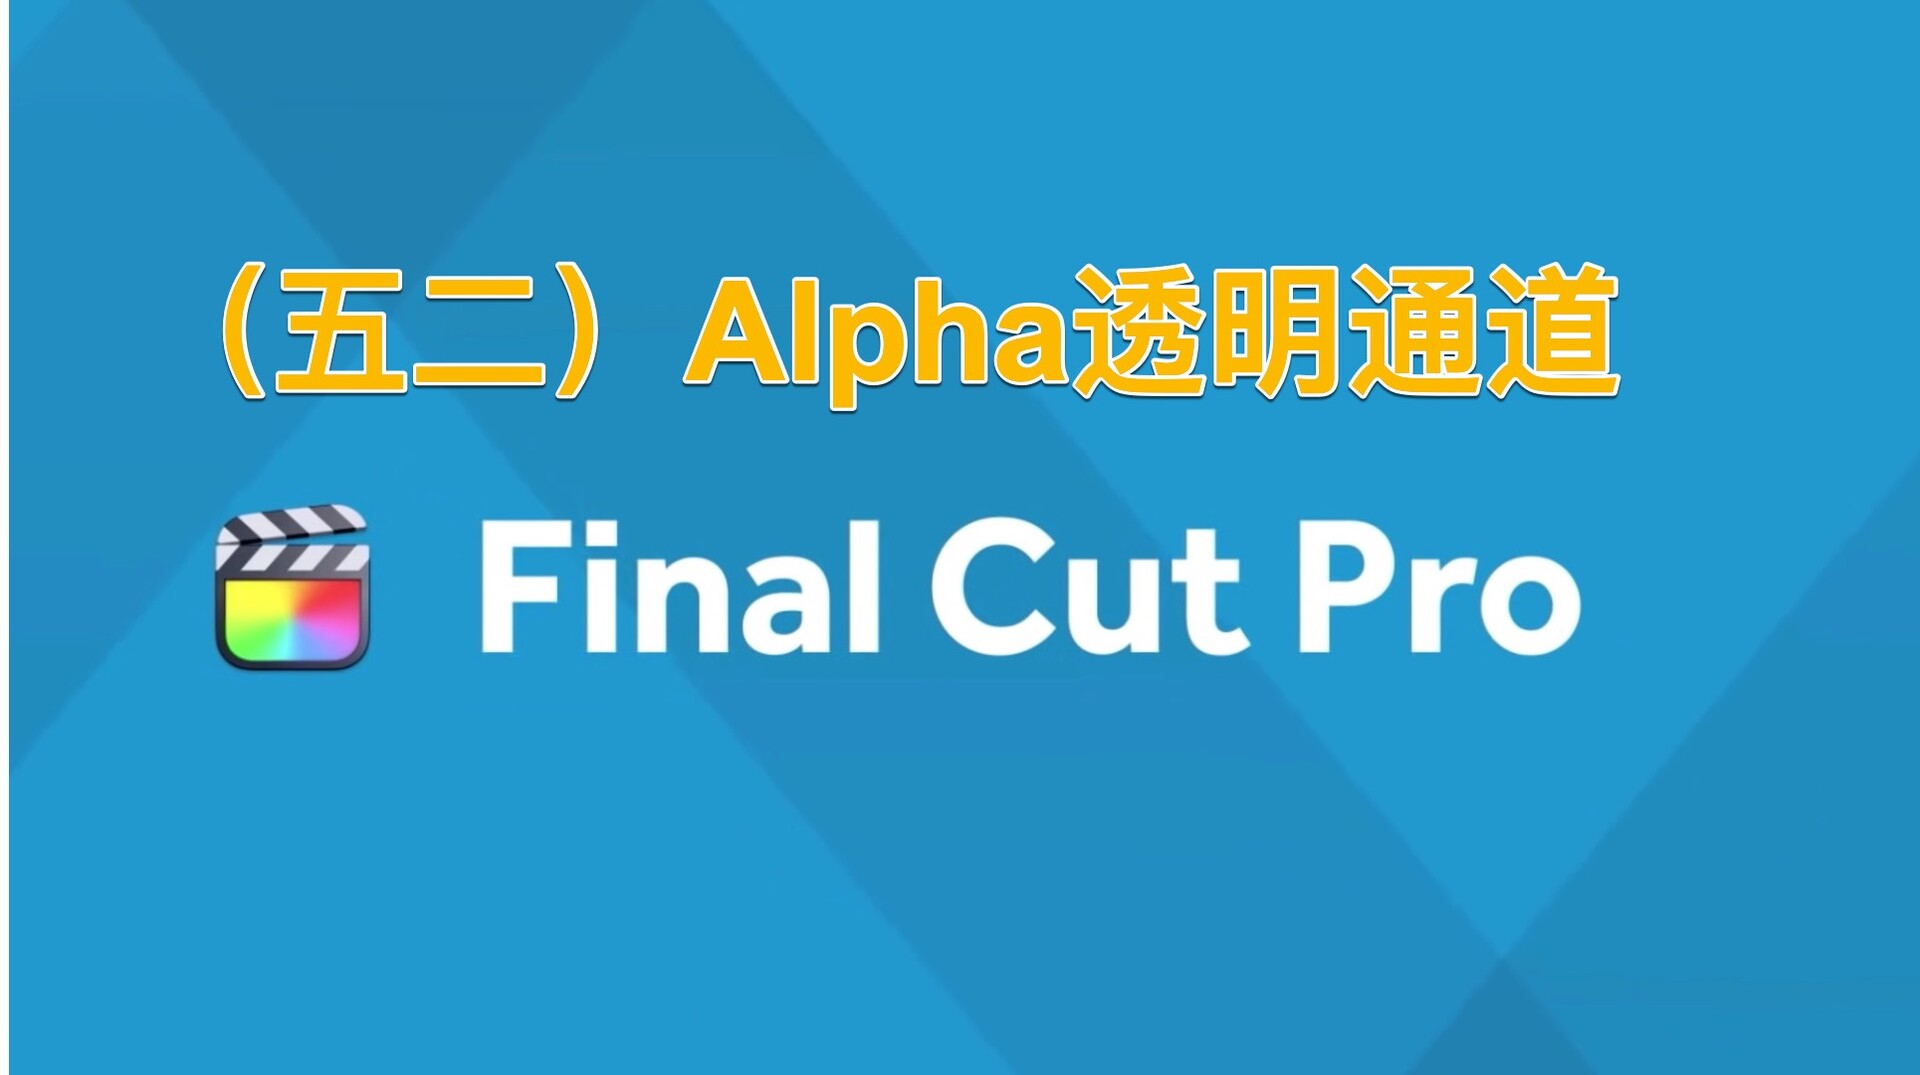 Final Cut Pro中文新手教程 (52) Alpha透明通道基础教程 如何绿幕抠图